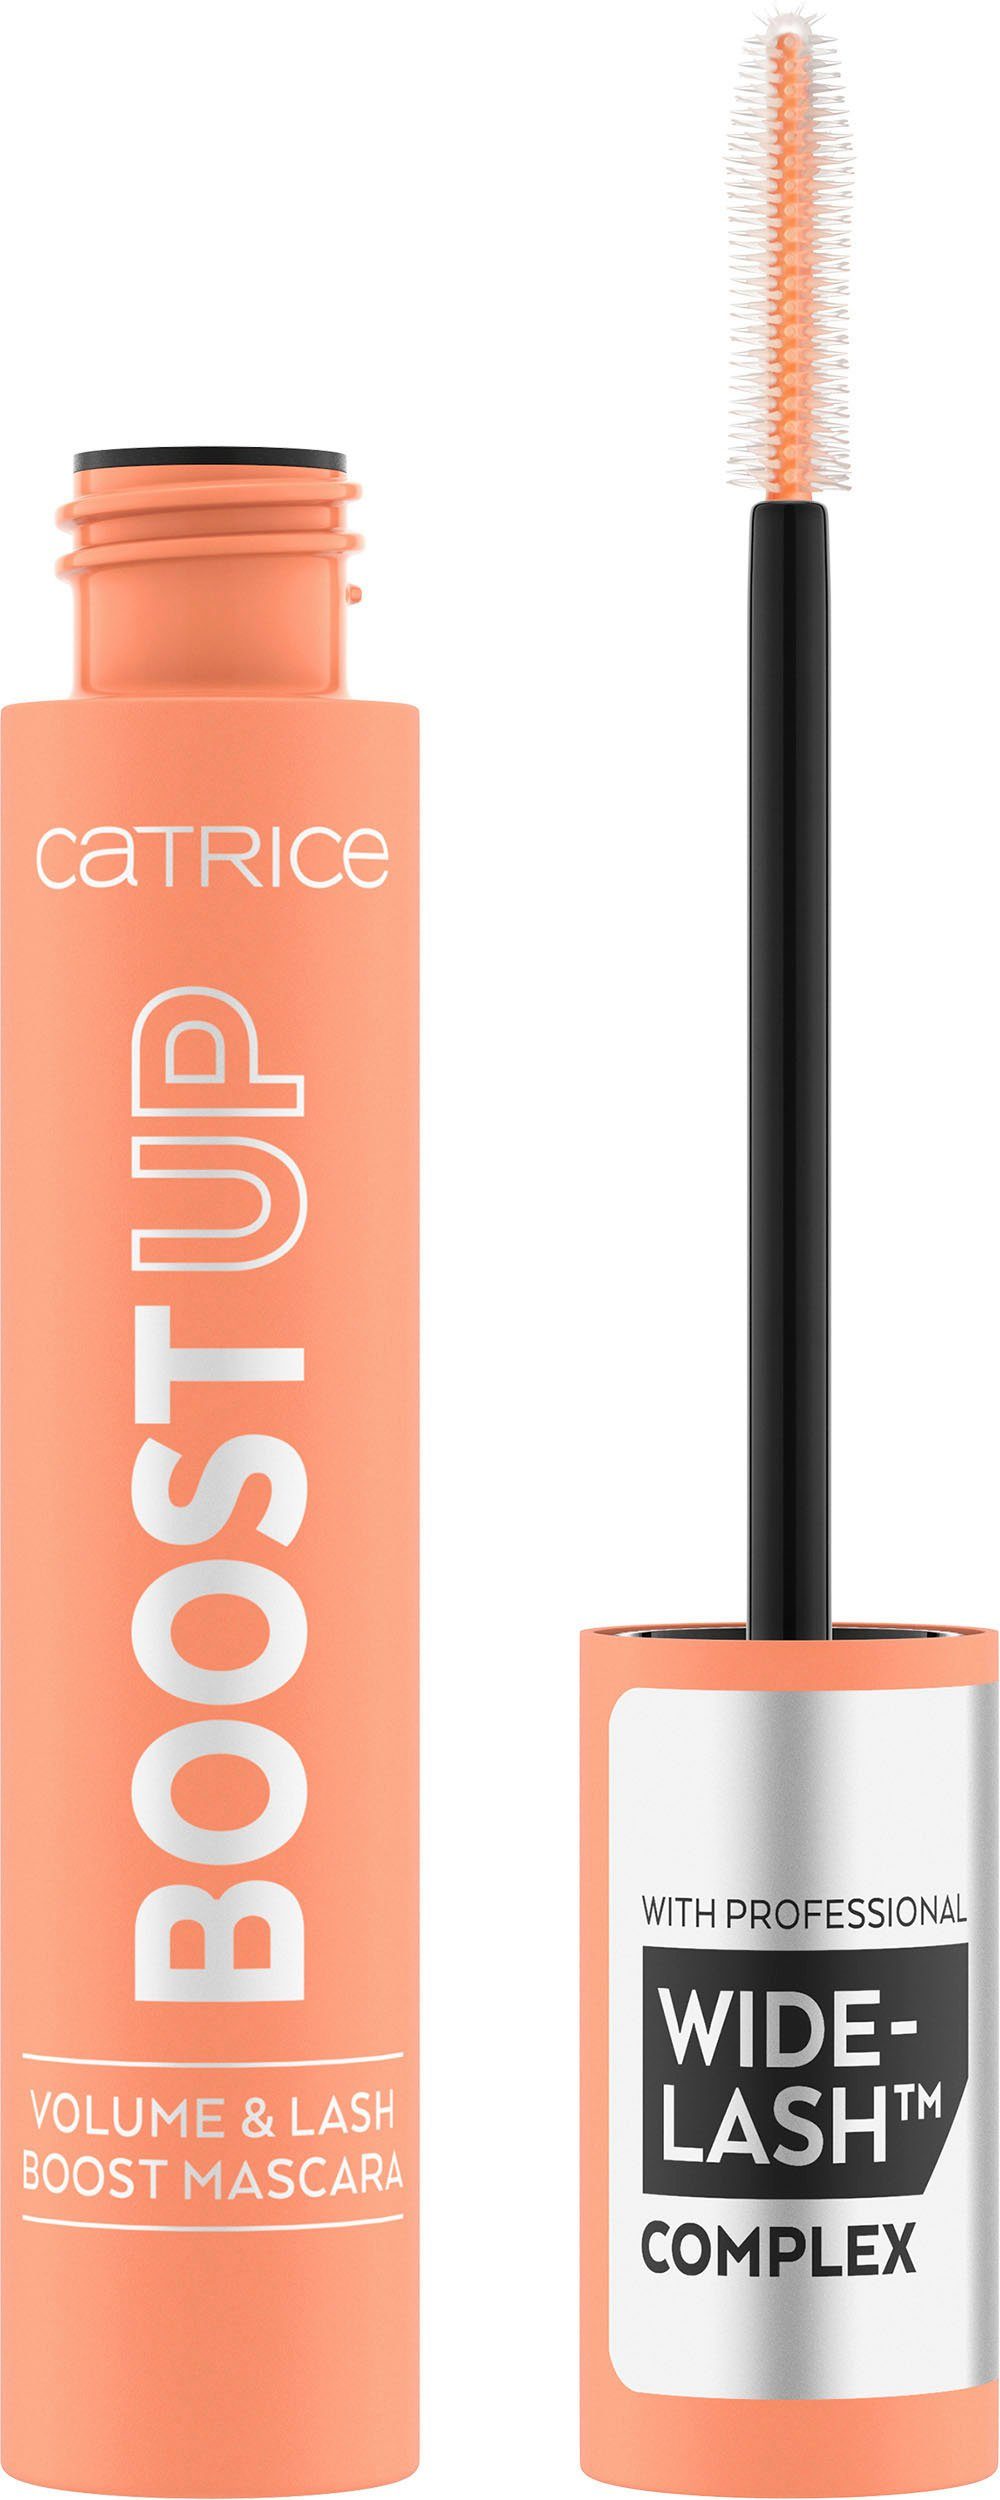 Catrice BOOST Mascara & Mascara 010, Boost Volume UP 3-tlg. Lash Catrice